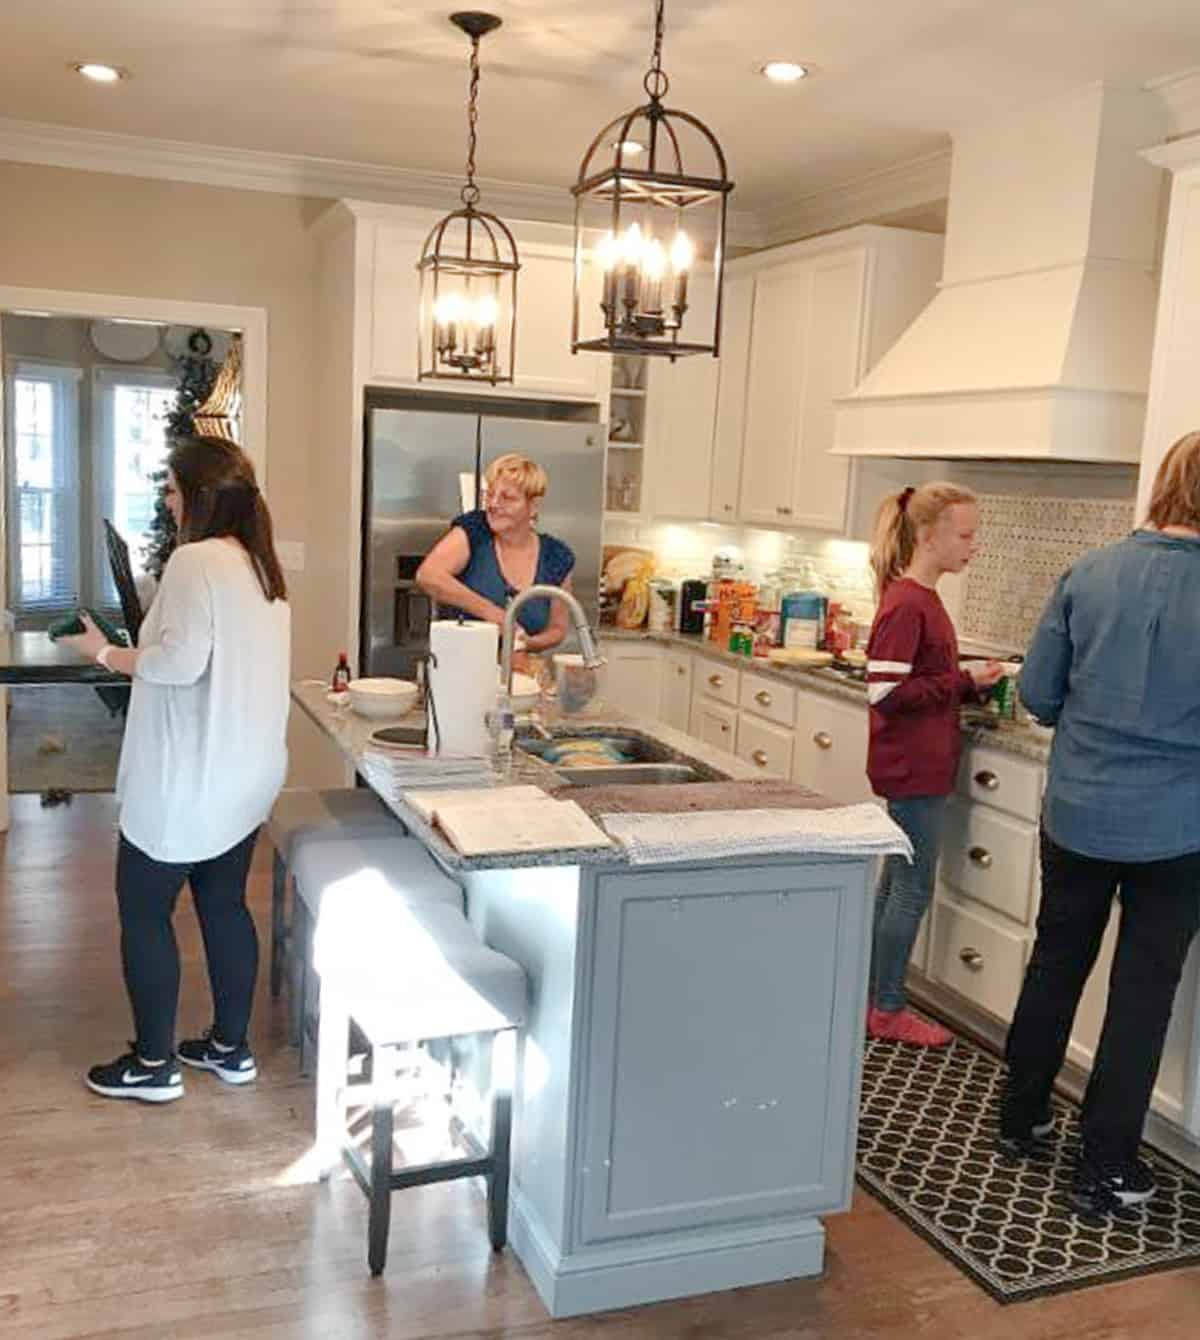 4 women in a kitchen cooking Thanksgiving dinner